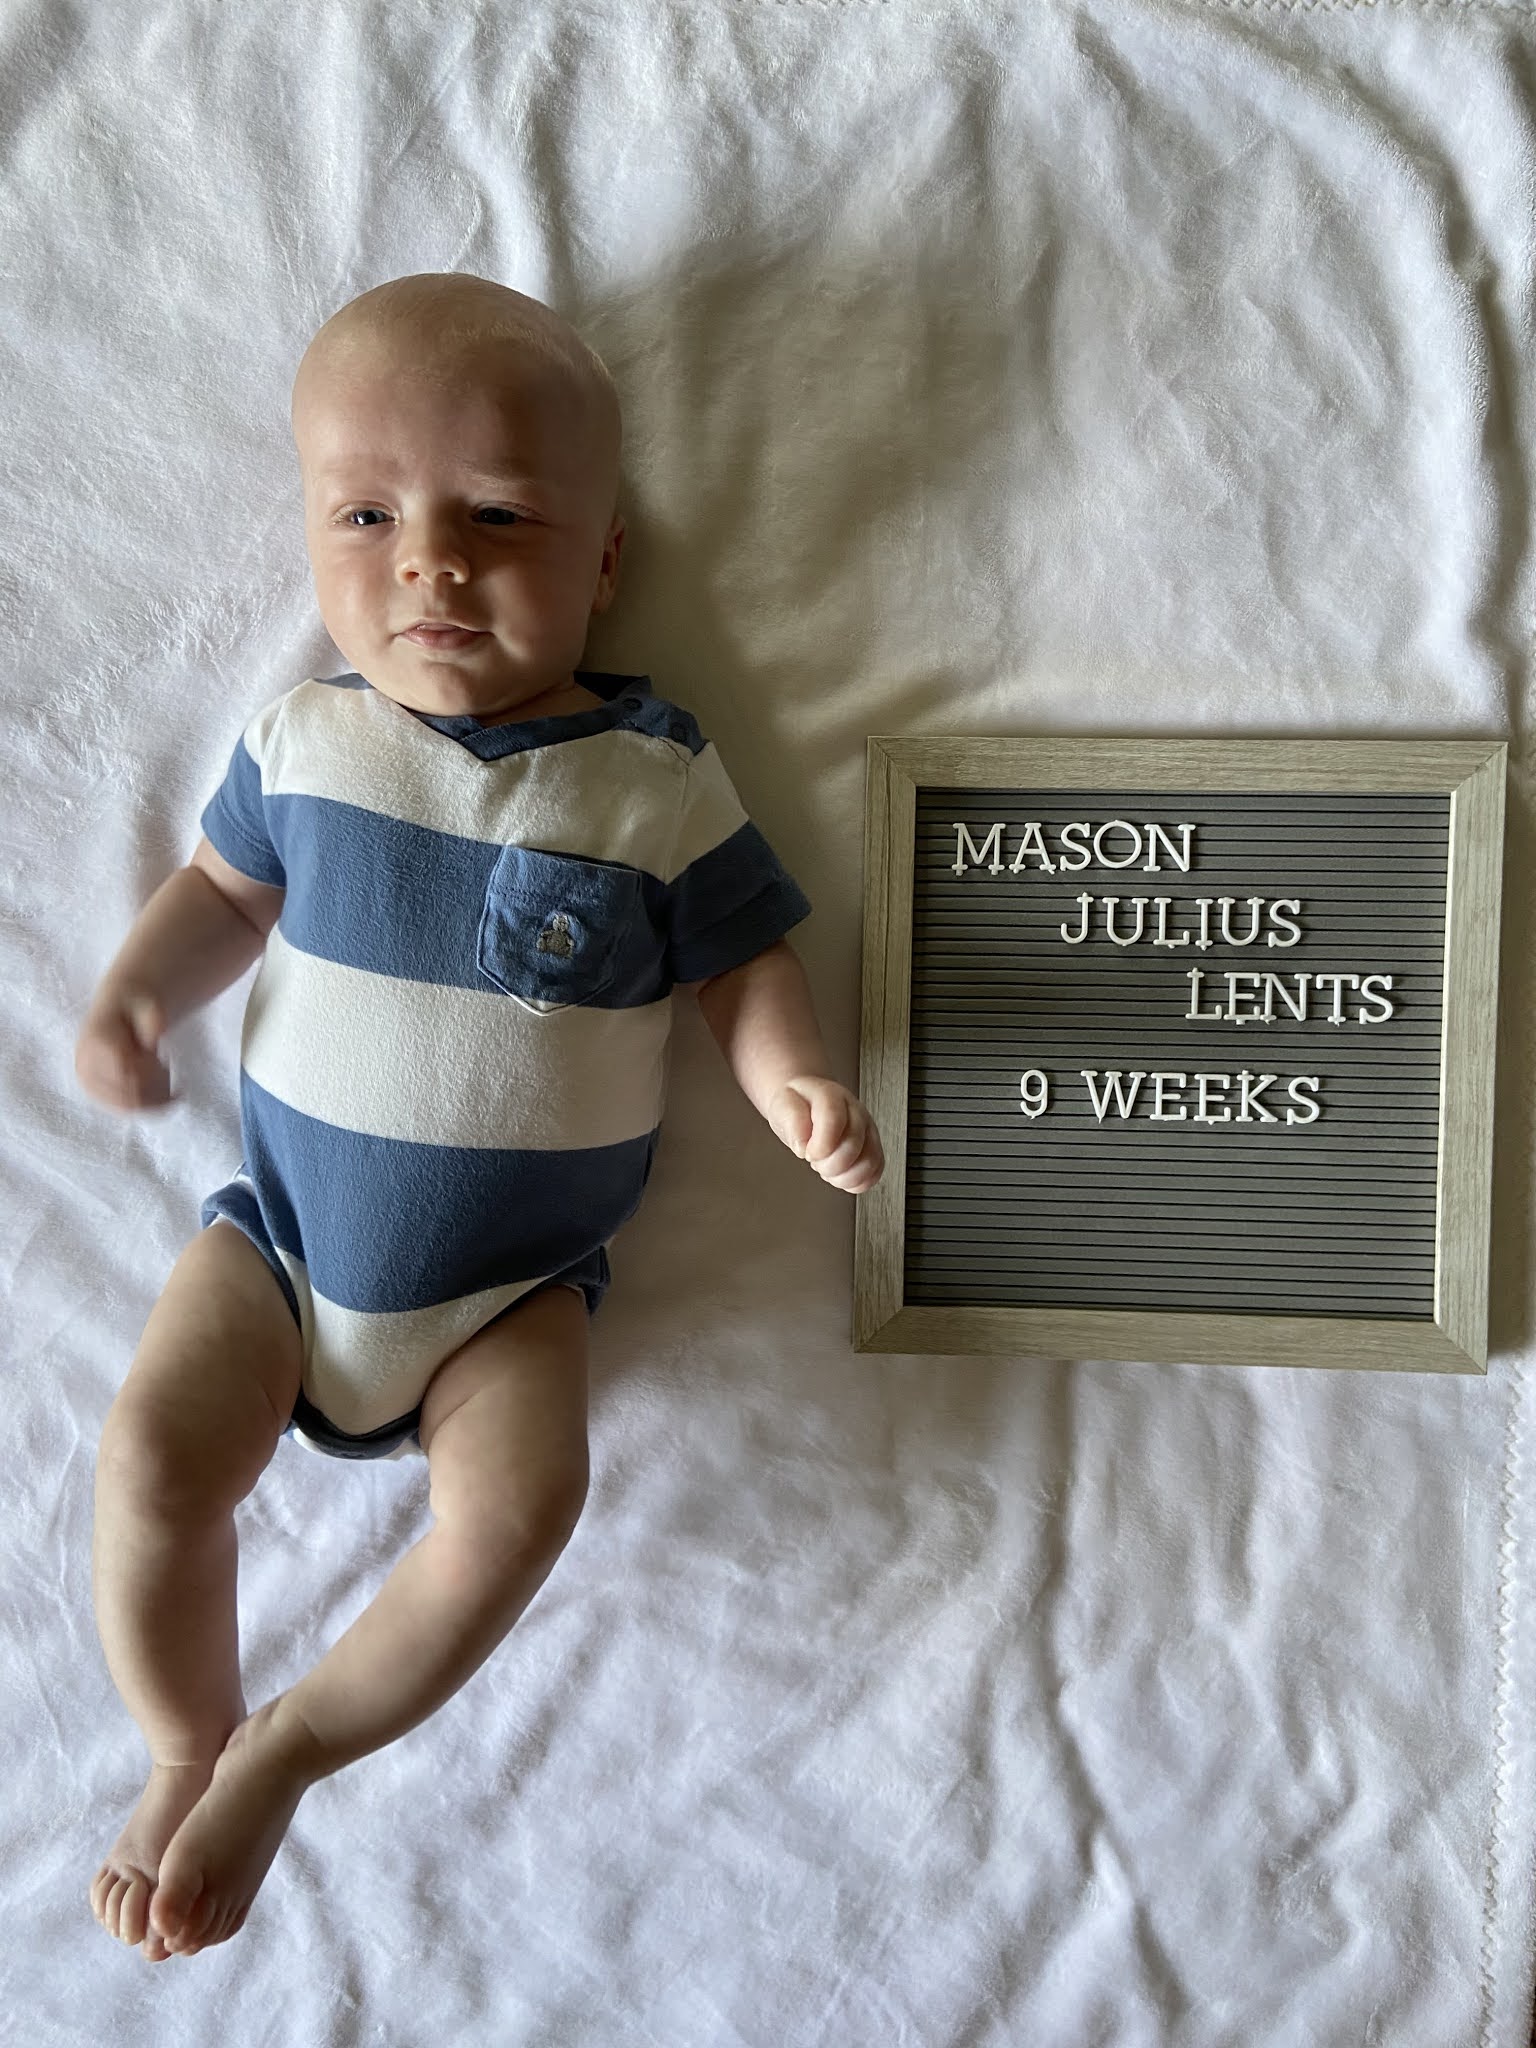 Life as a Lents: Mason's first flight